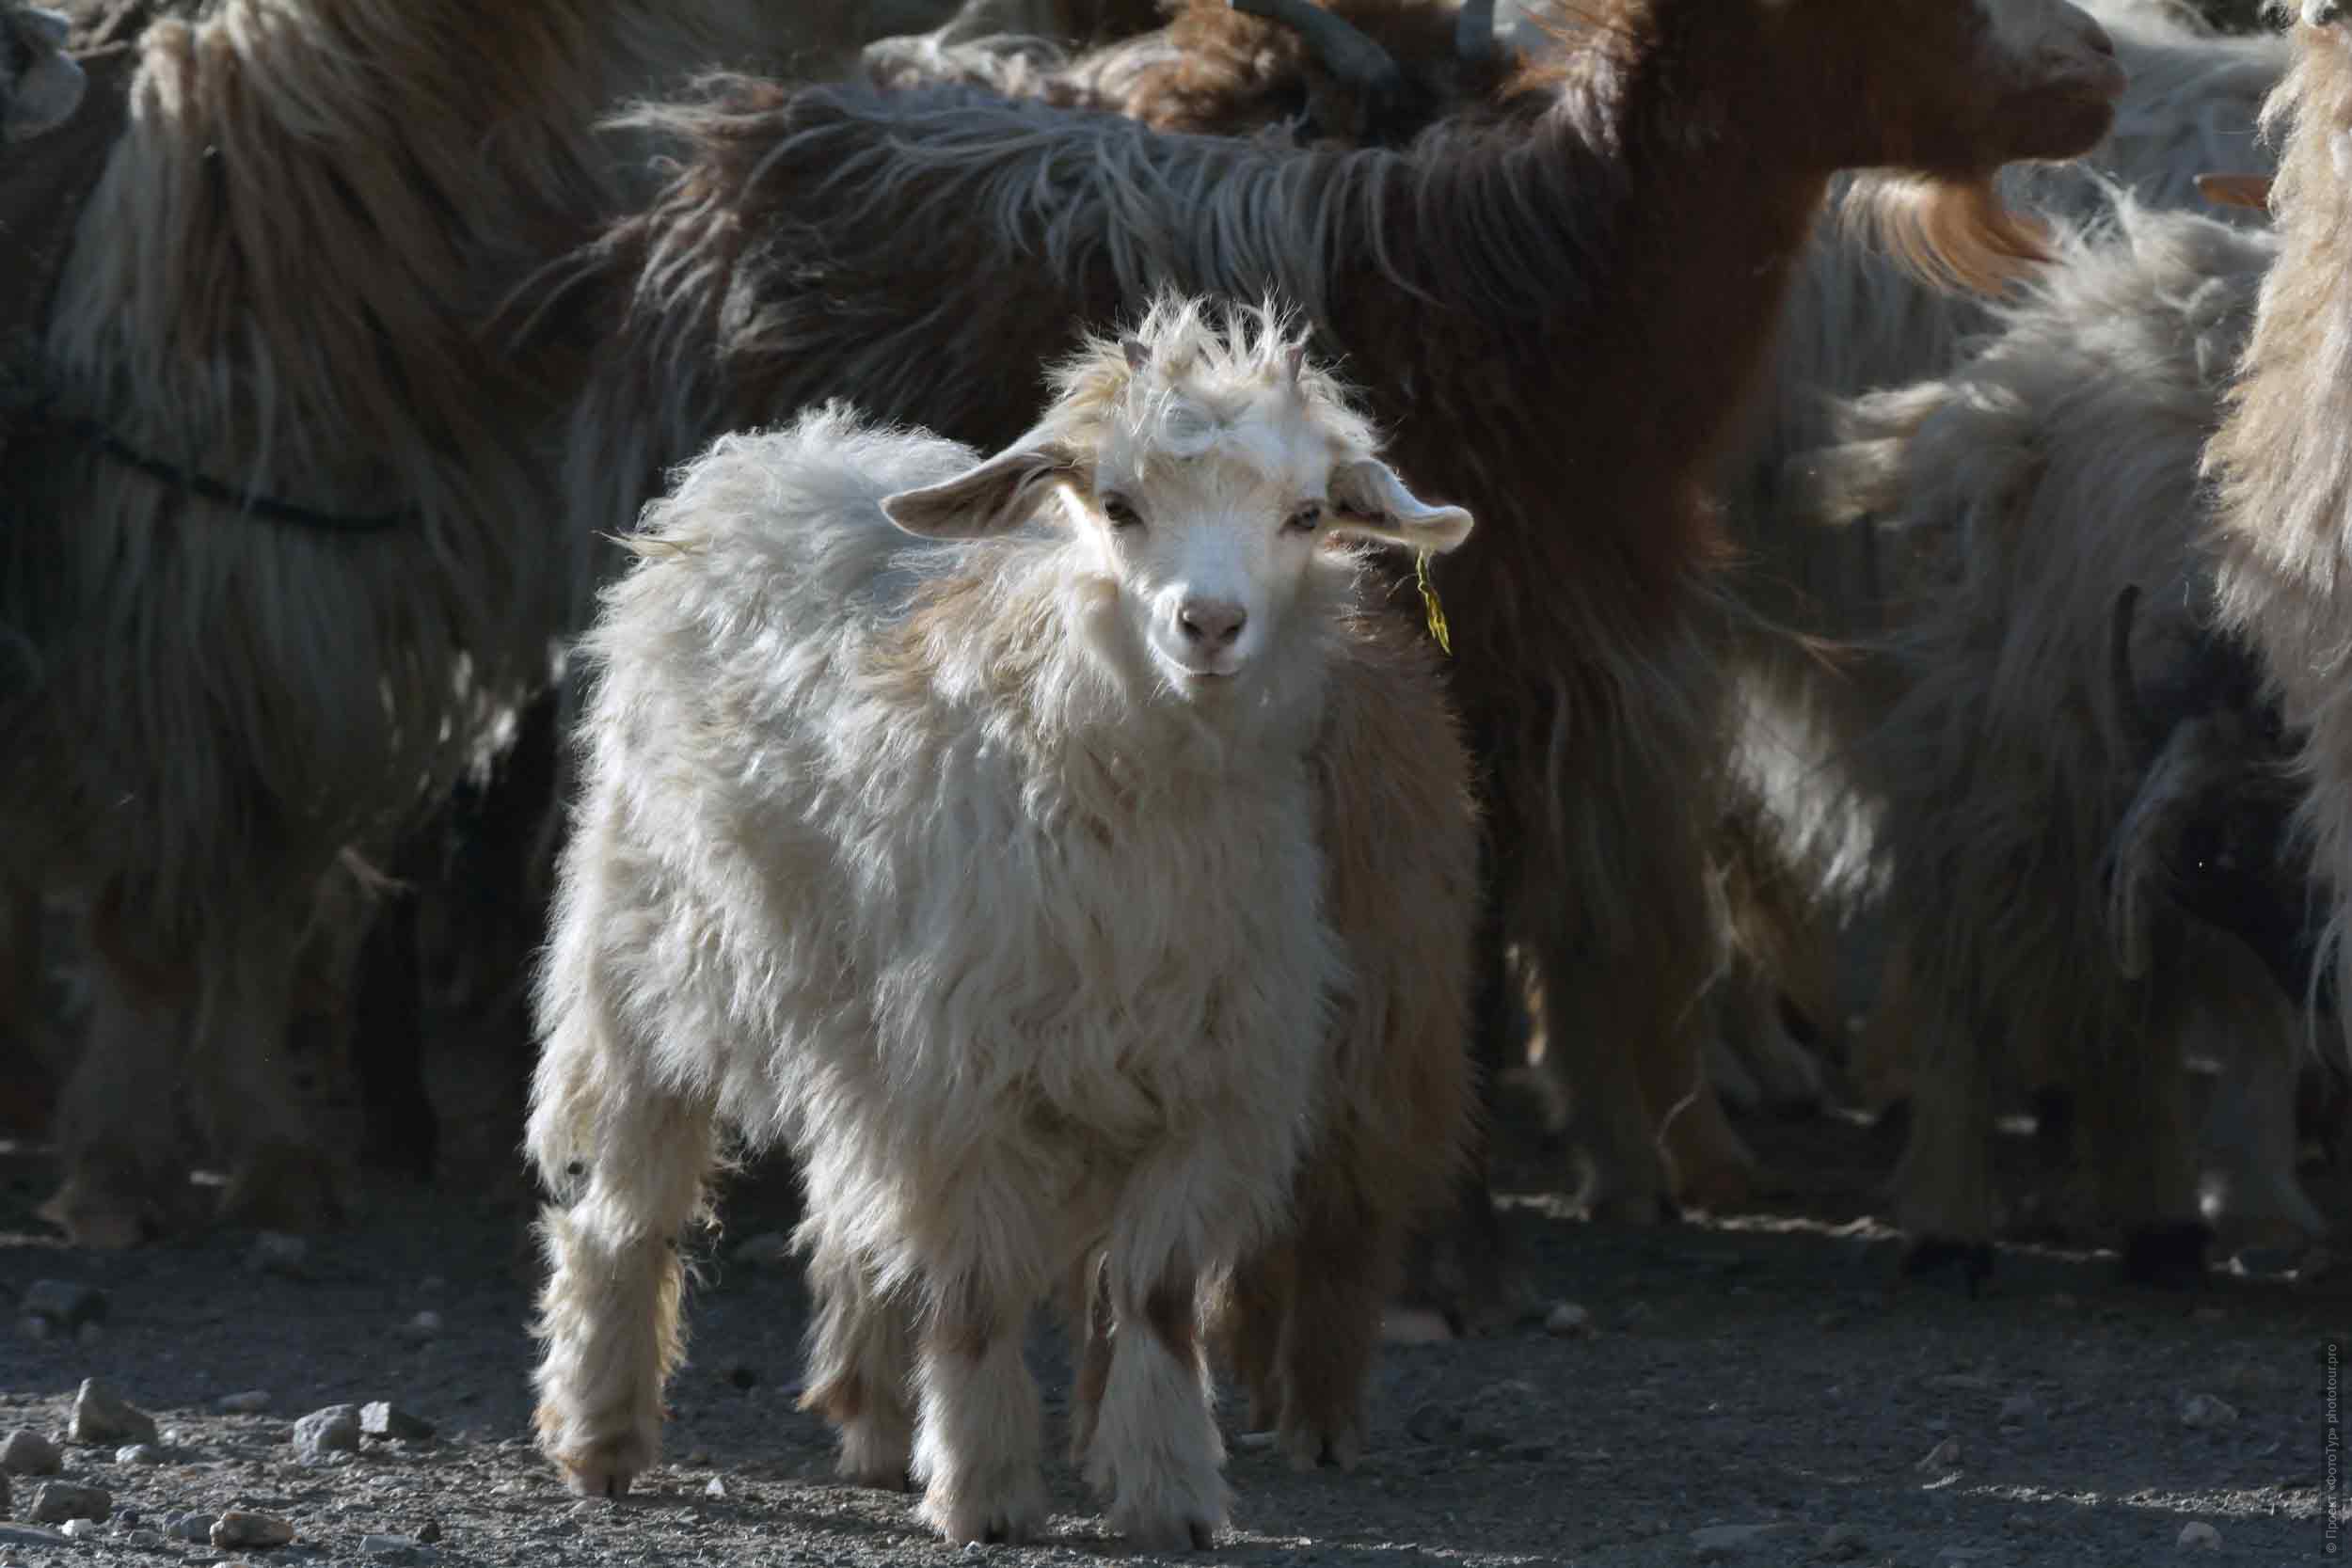 Malen Ladakh goat, Ladakh women’s tour, August 31 - September 14, 2019.